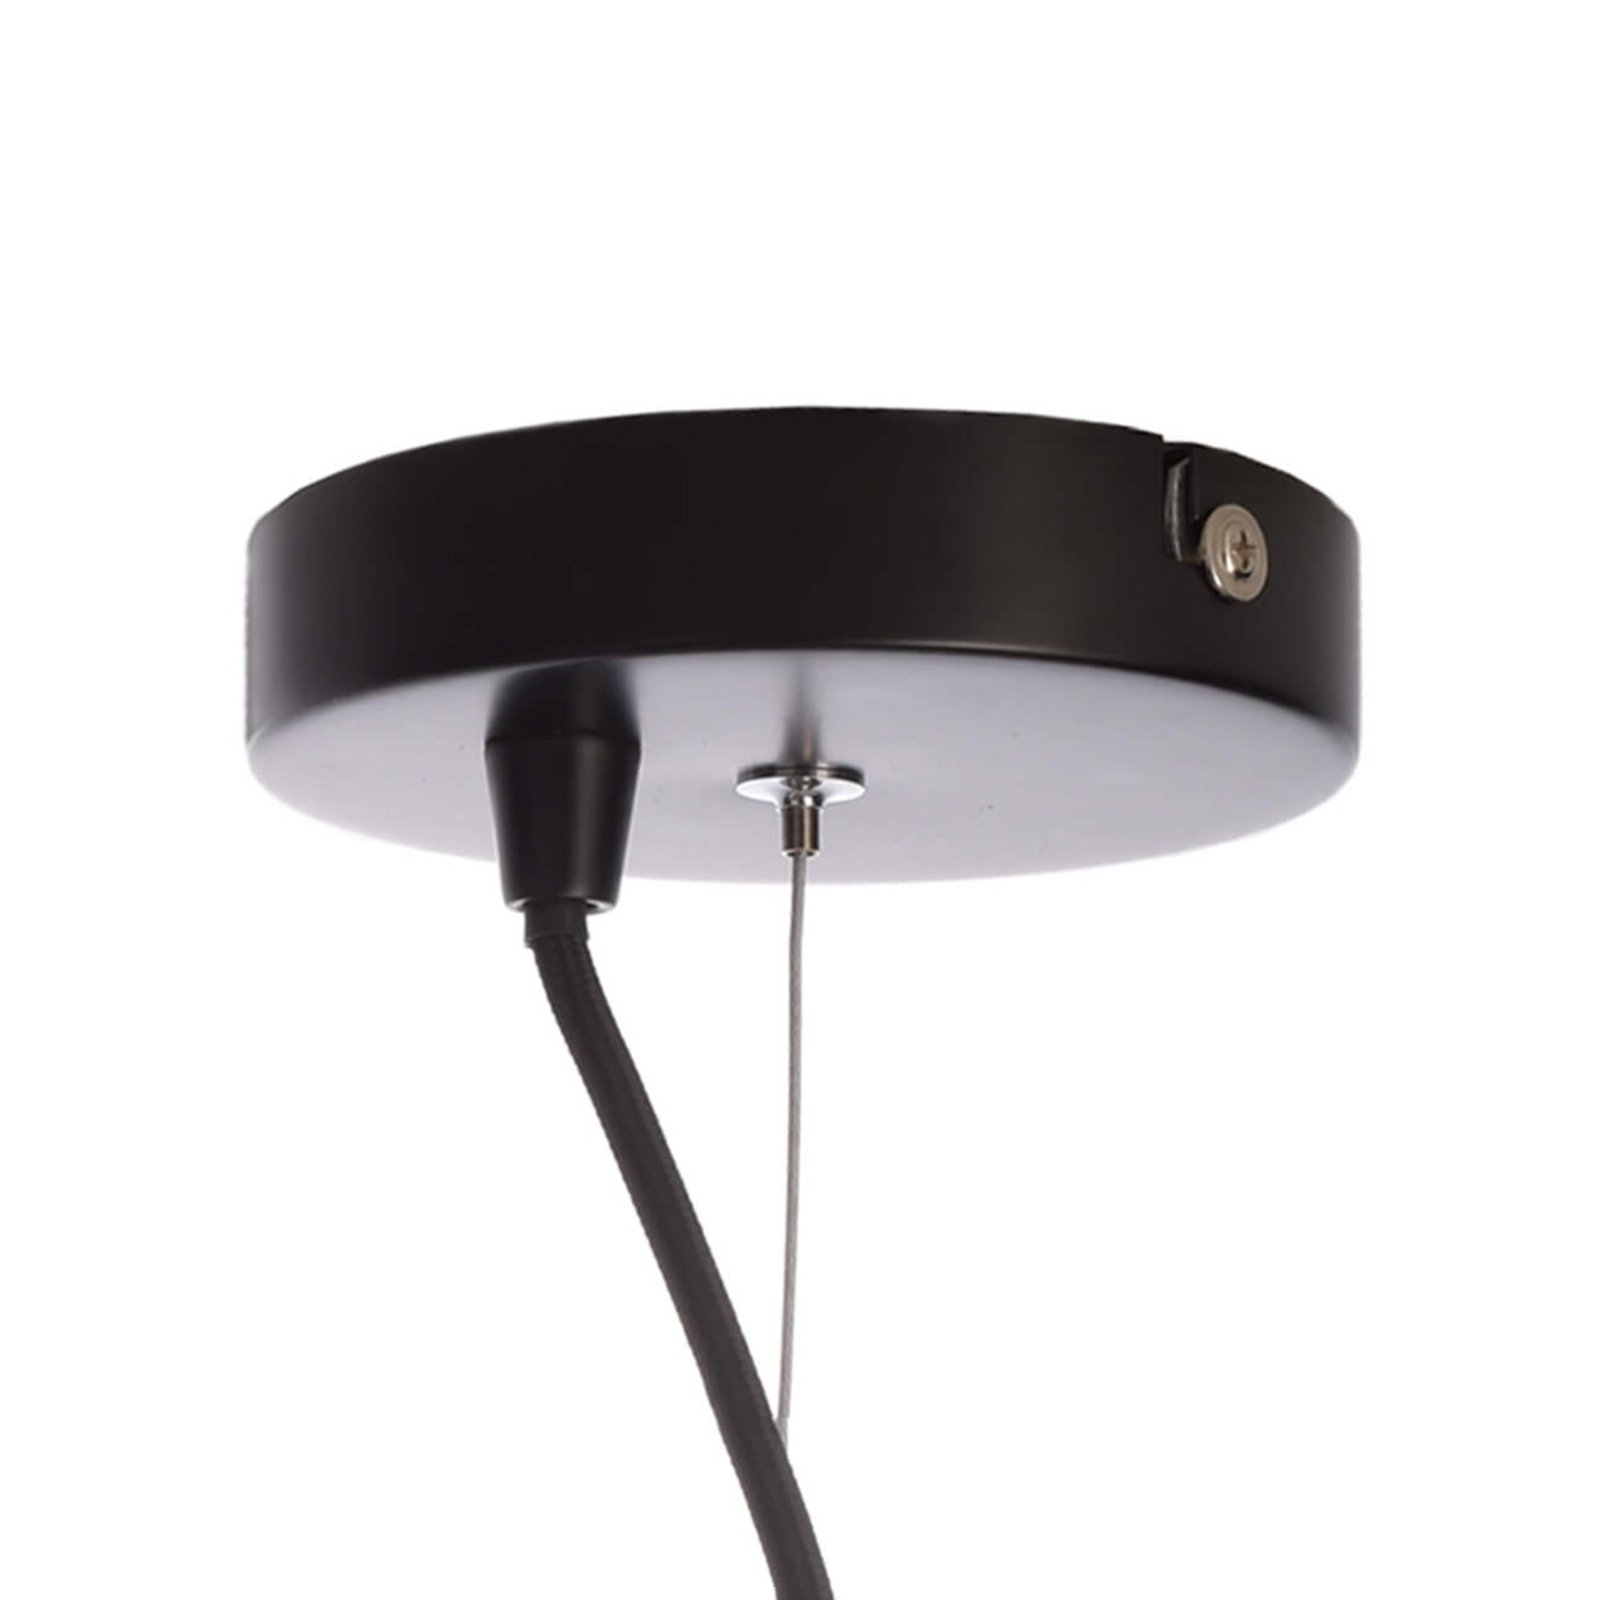 Asterope pendant light, Ø 50cm round, black